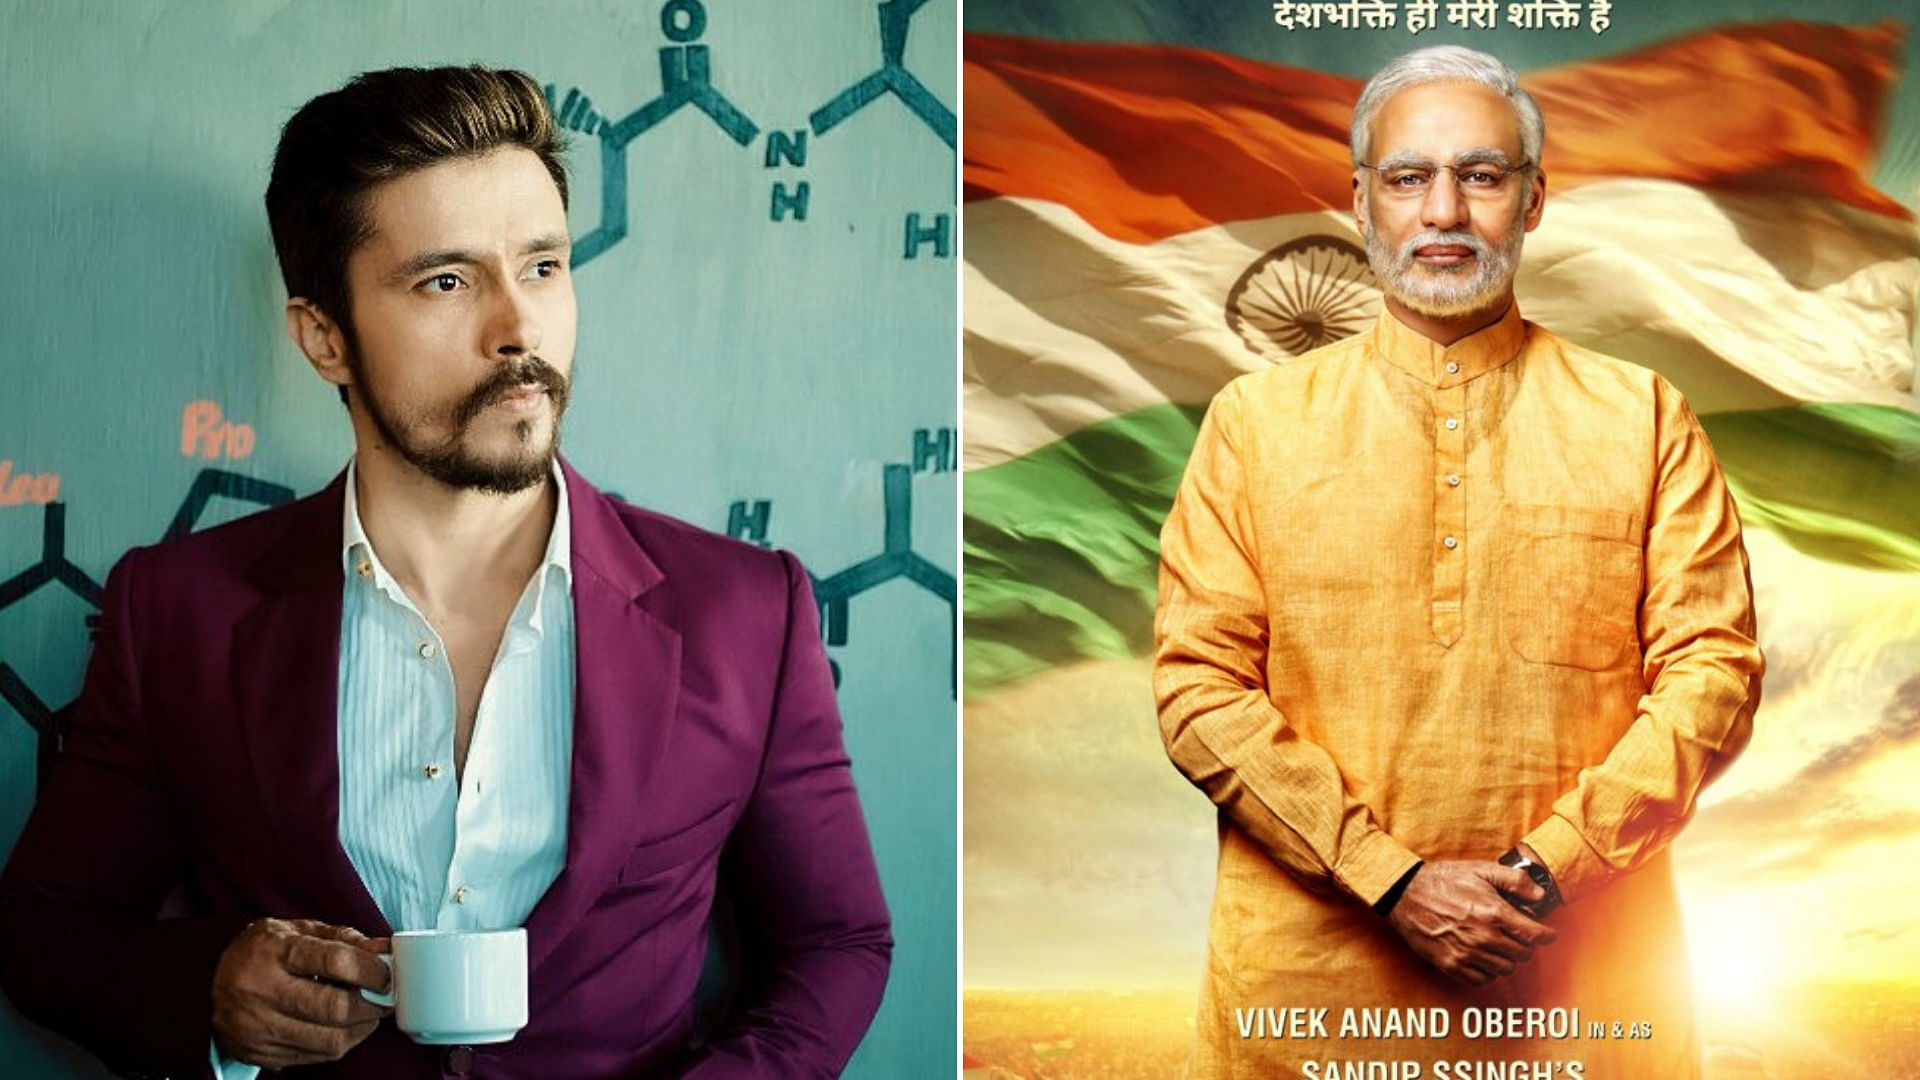 Darshan Kumaar has been cast in the upcoming biopic on Narendra Modi.